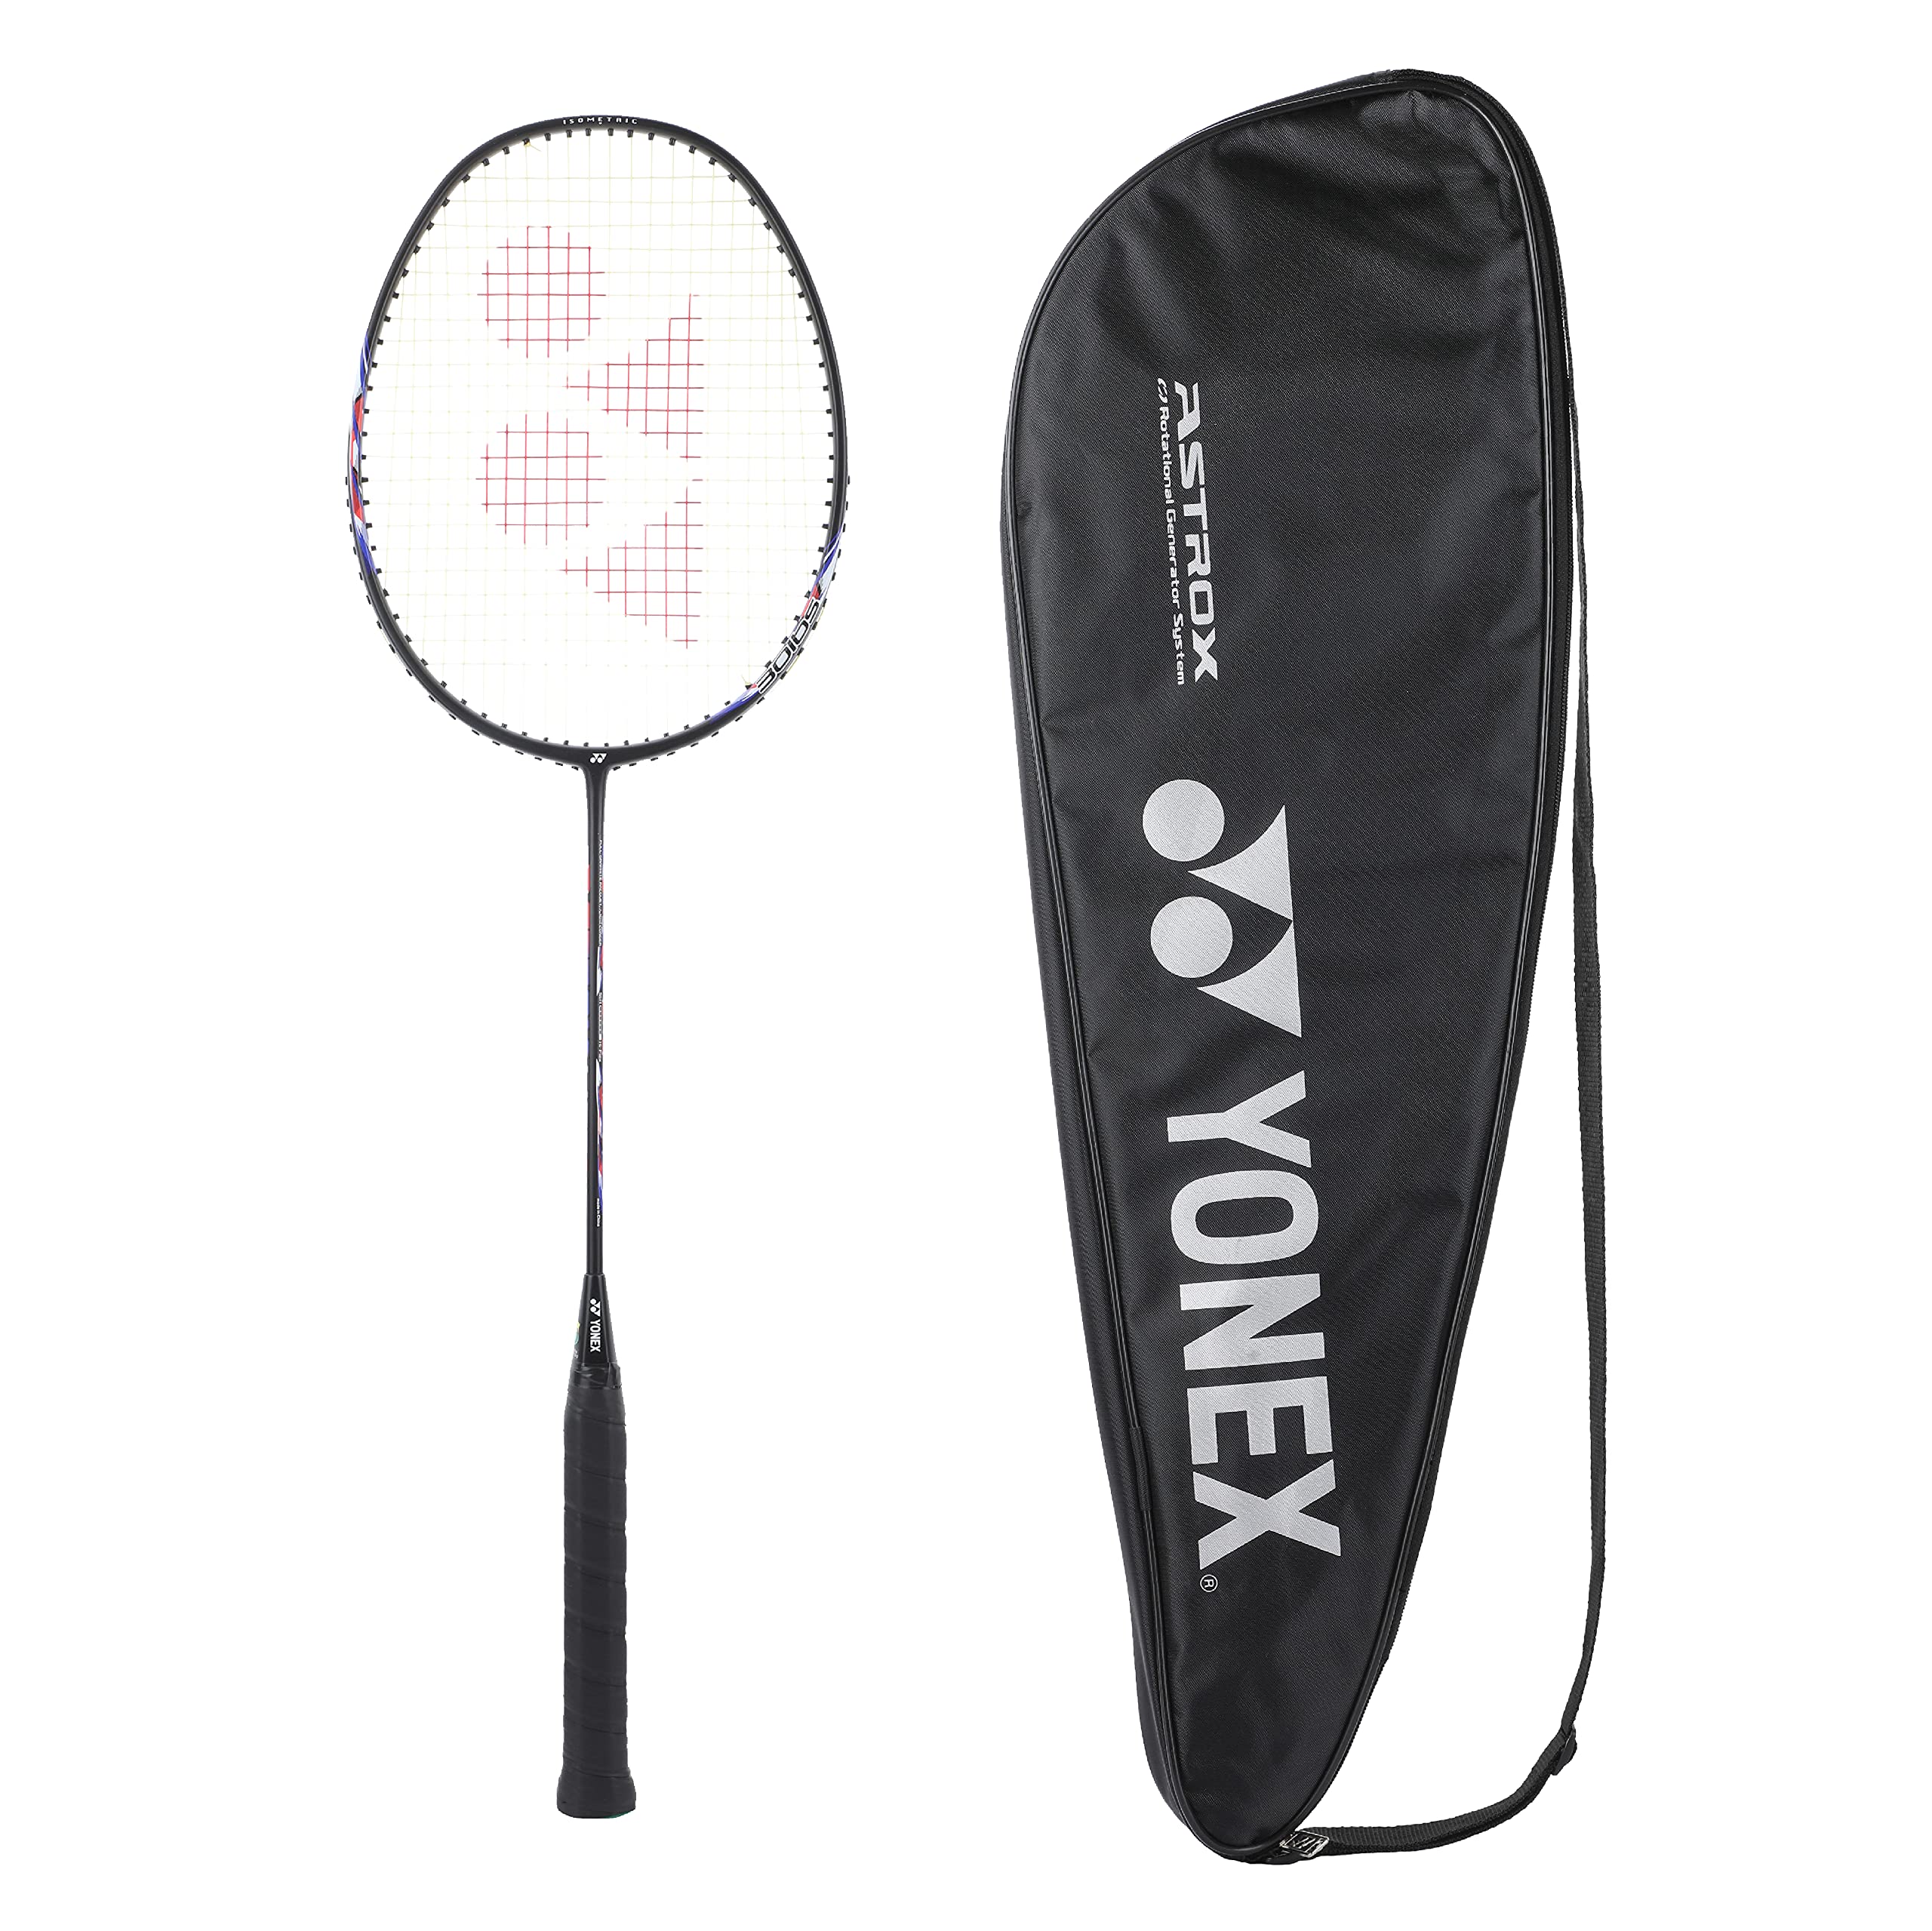 YONEX graphite Badminton Racquet Astrox Lite Series (g4, 77 grams, 30 lbs Tension) (Astrox Lite 21i Black)